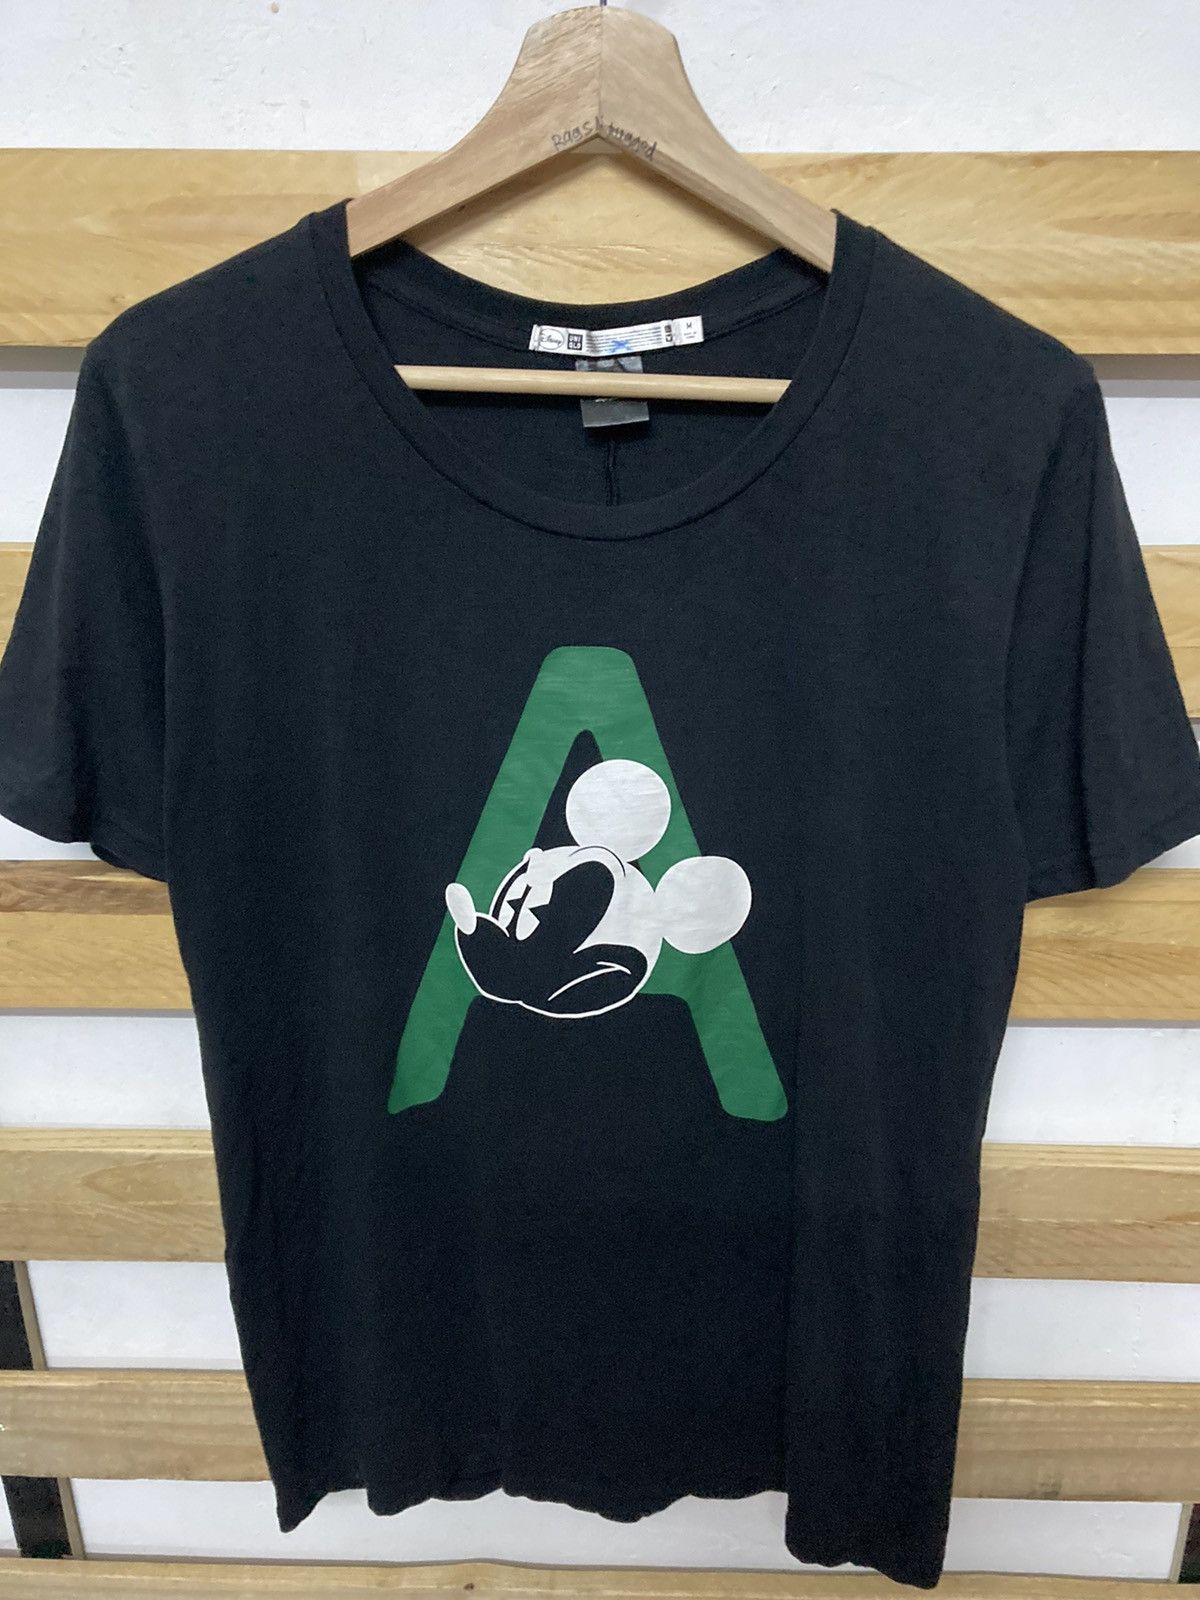 Uniqlo x Undercover Disney Mickey Mouse Tshirt - 2